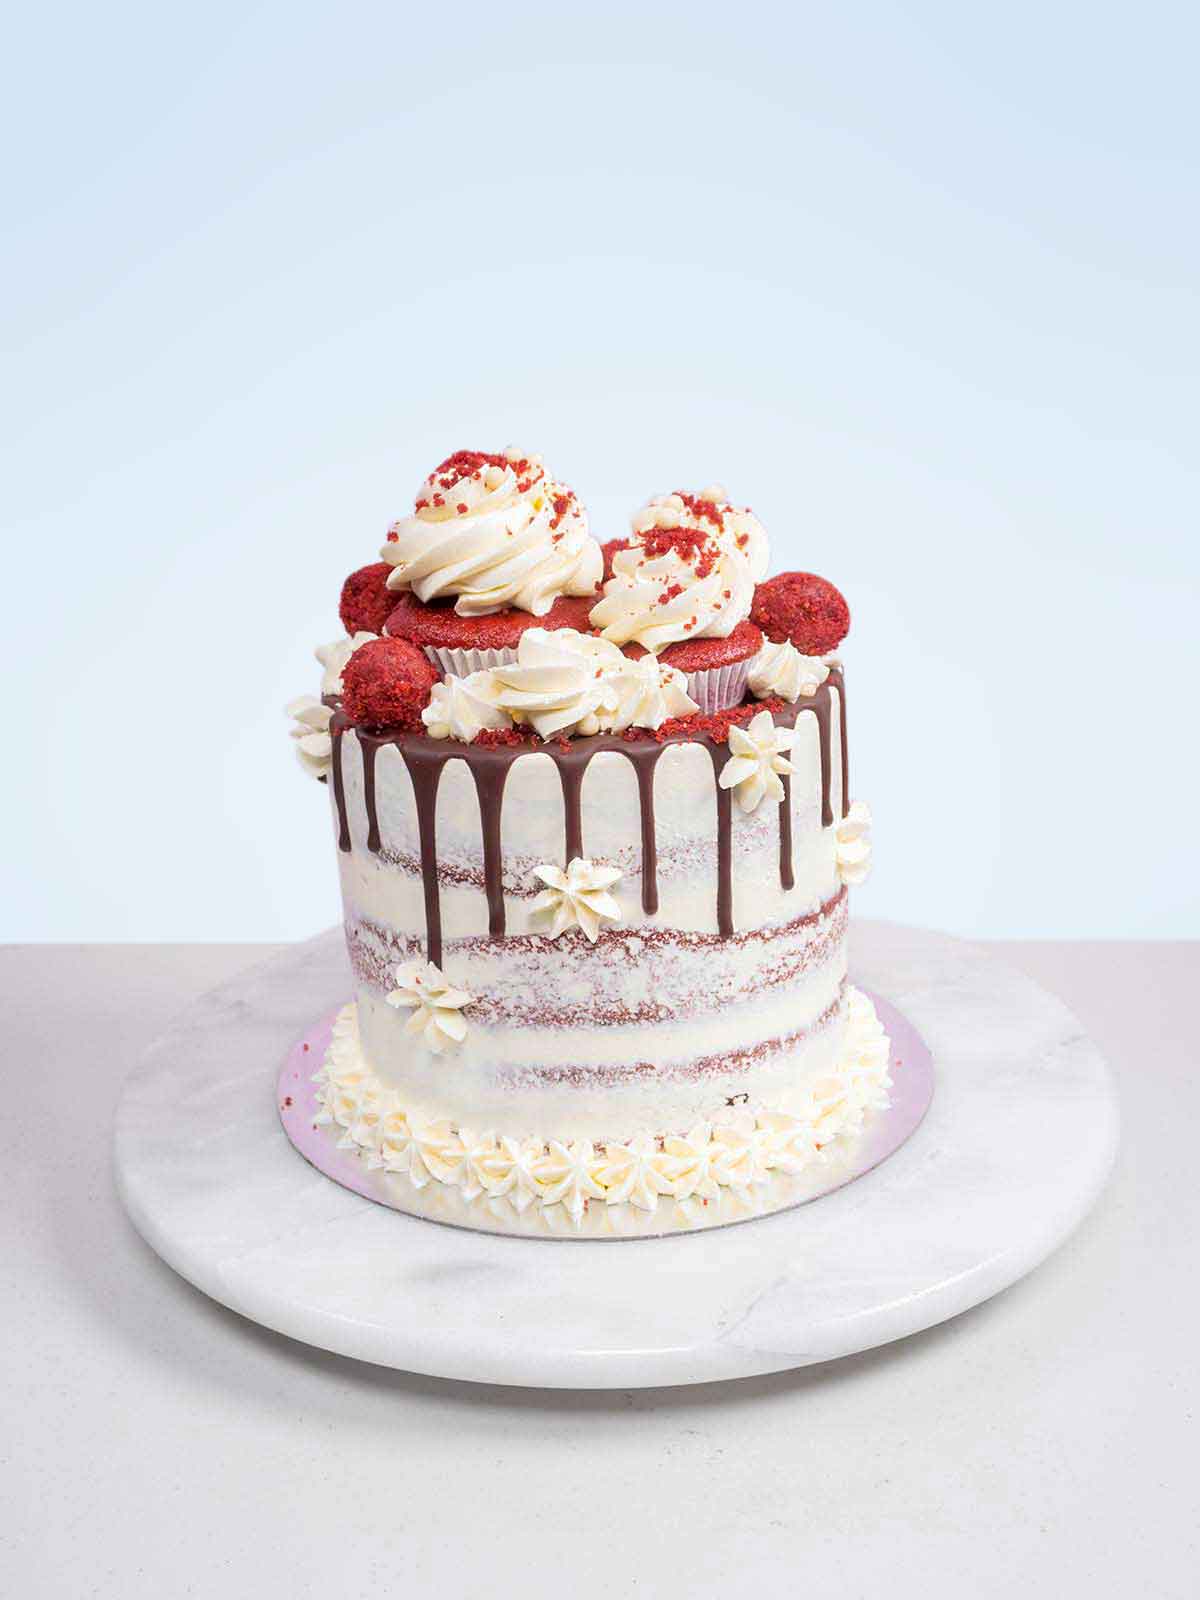 18th Birthday Cake for Girl | Yummy cake